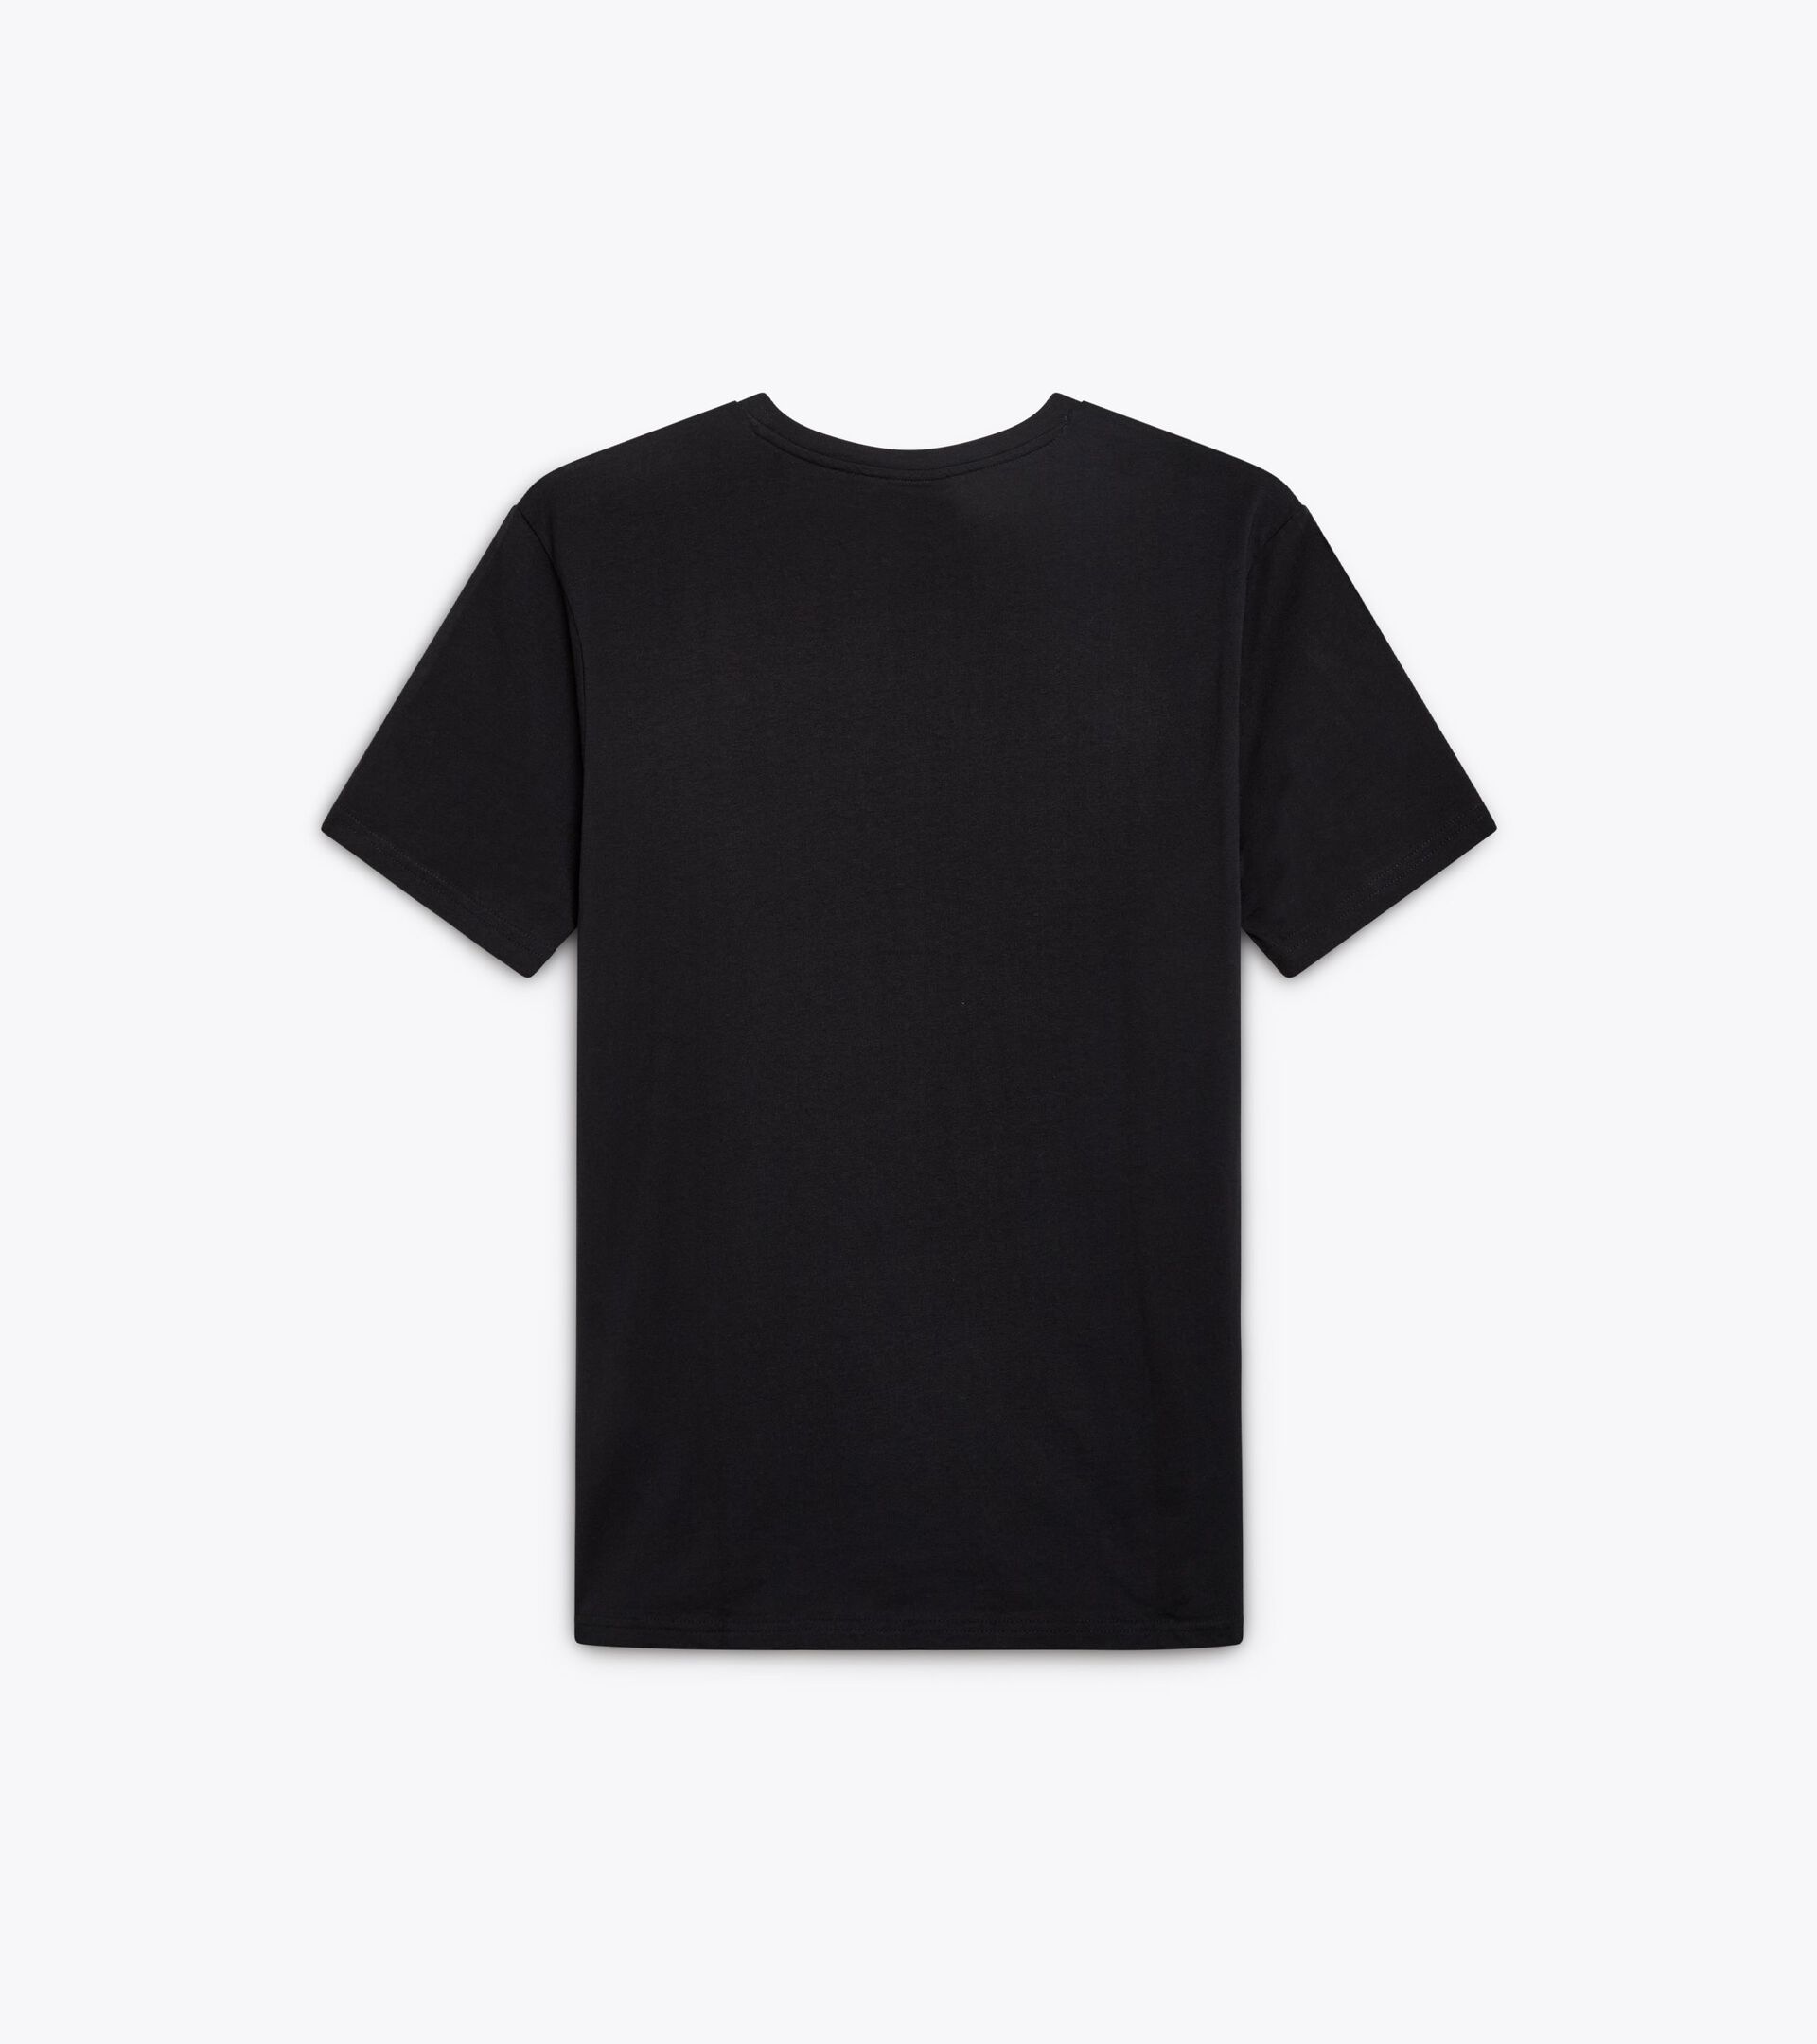 Sports T-shirt - Men’s T-SHIRT SS CORE BLACK - Diadora